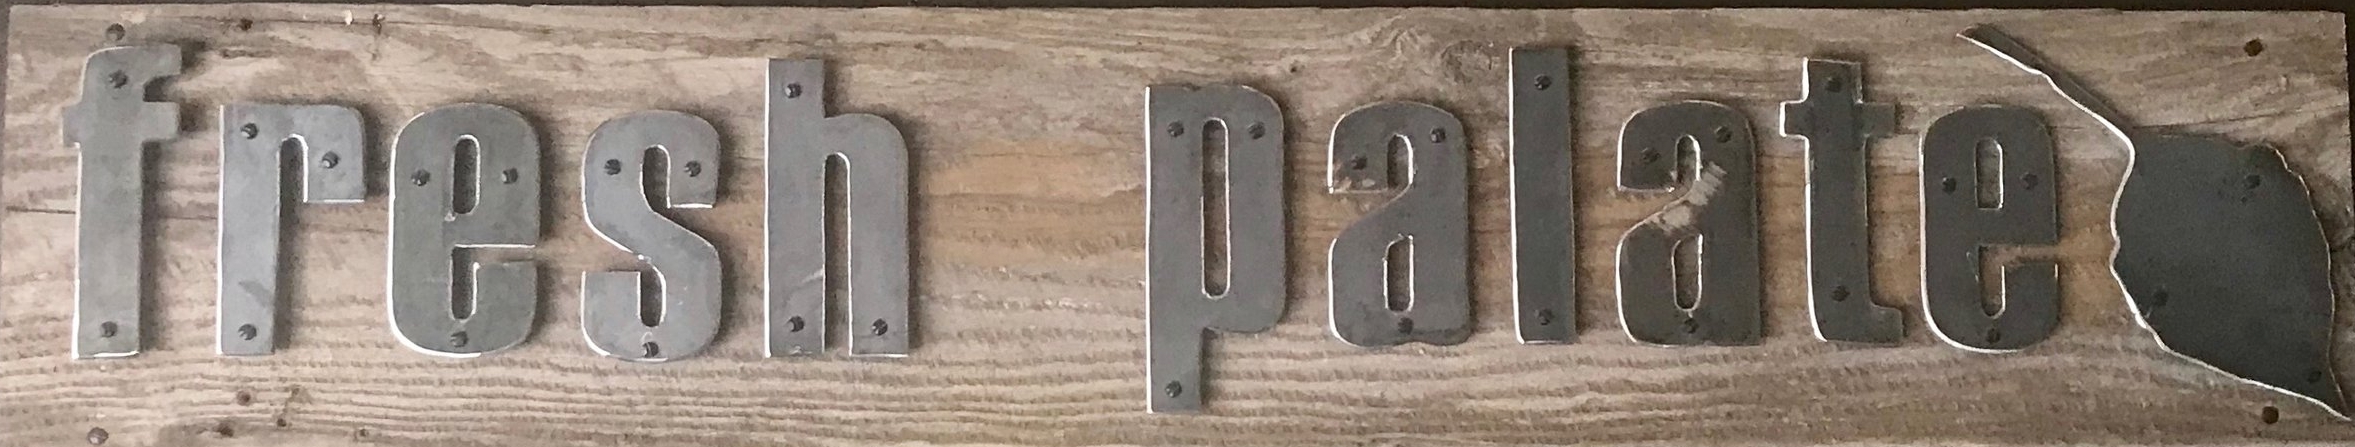 FP wood sign.JPG